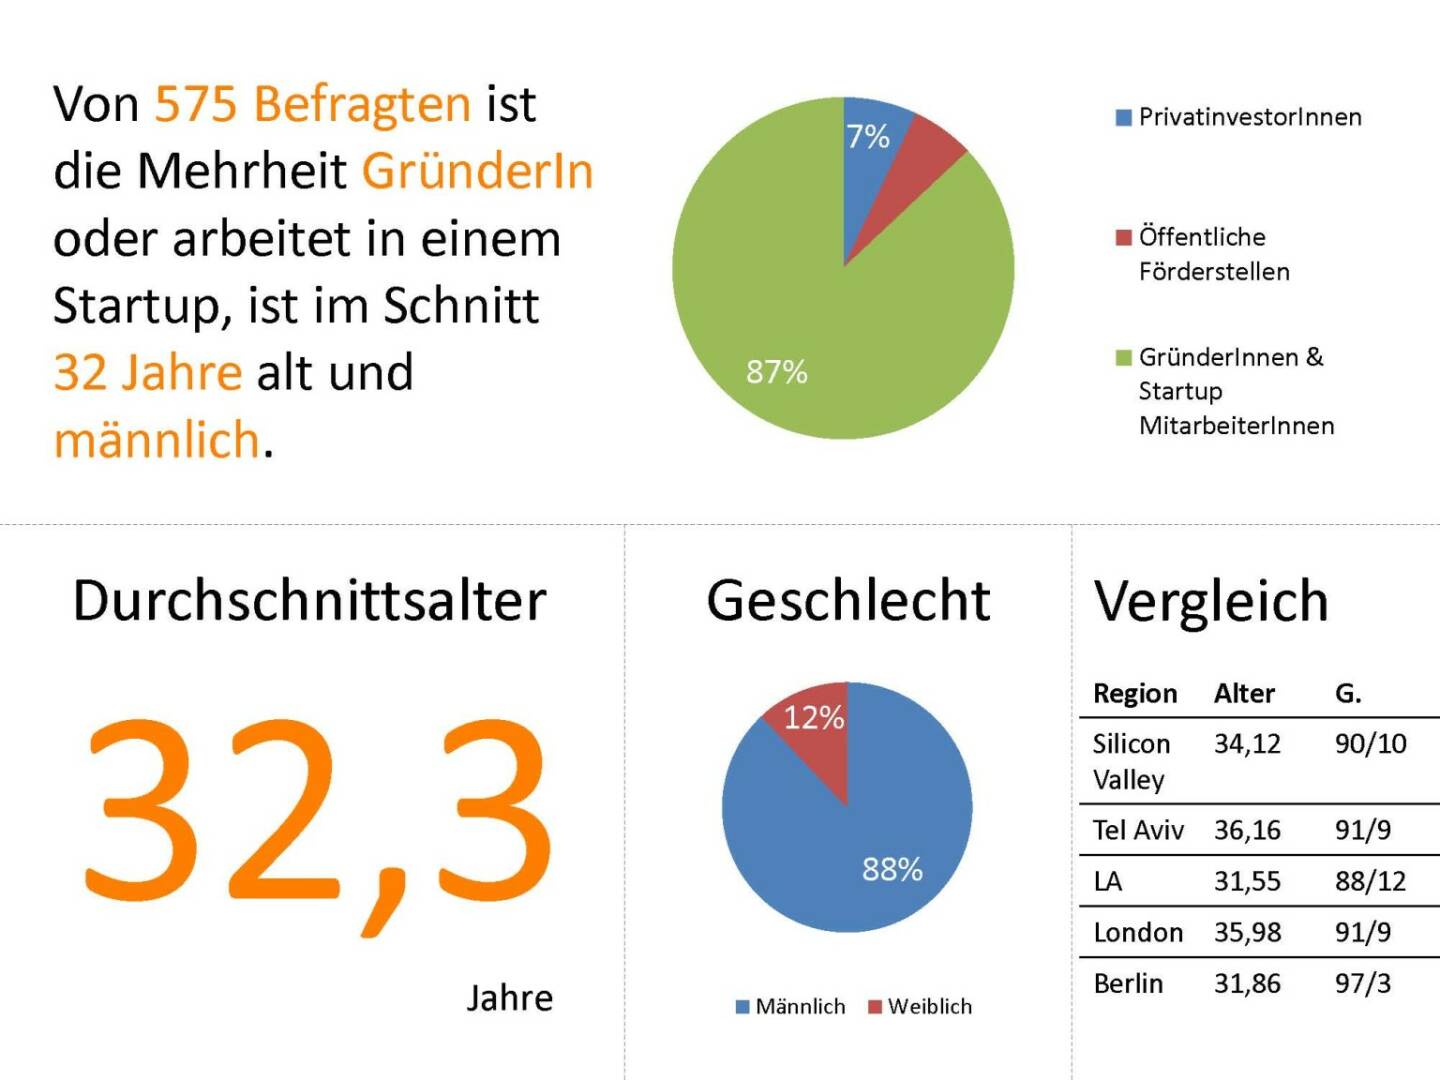 Austrian Startup Report 2013: 575 Befragte